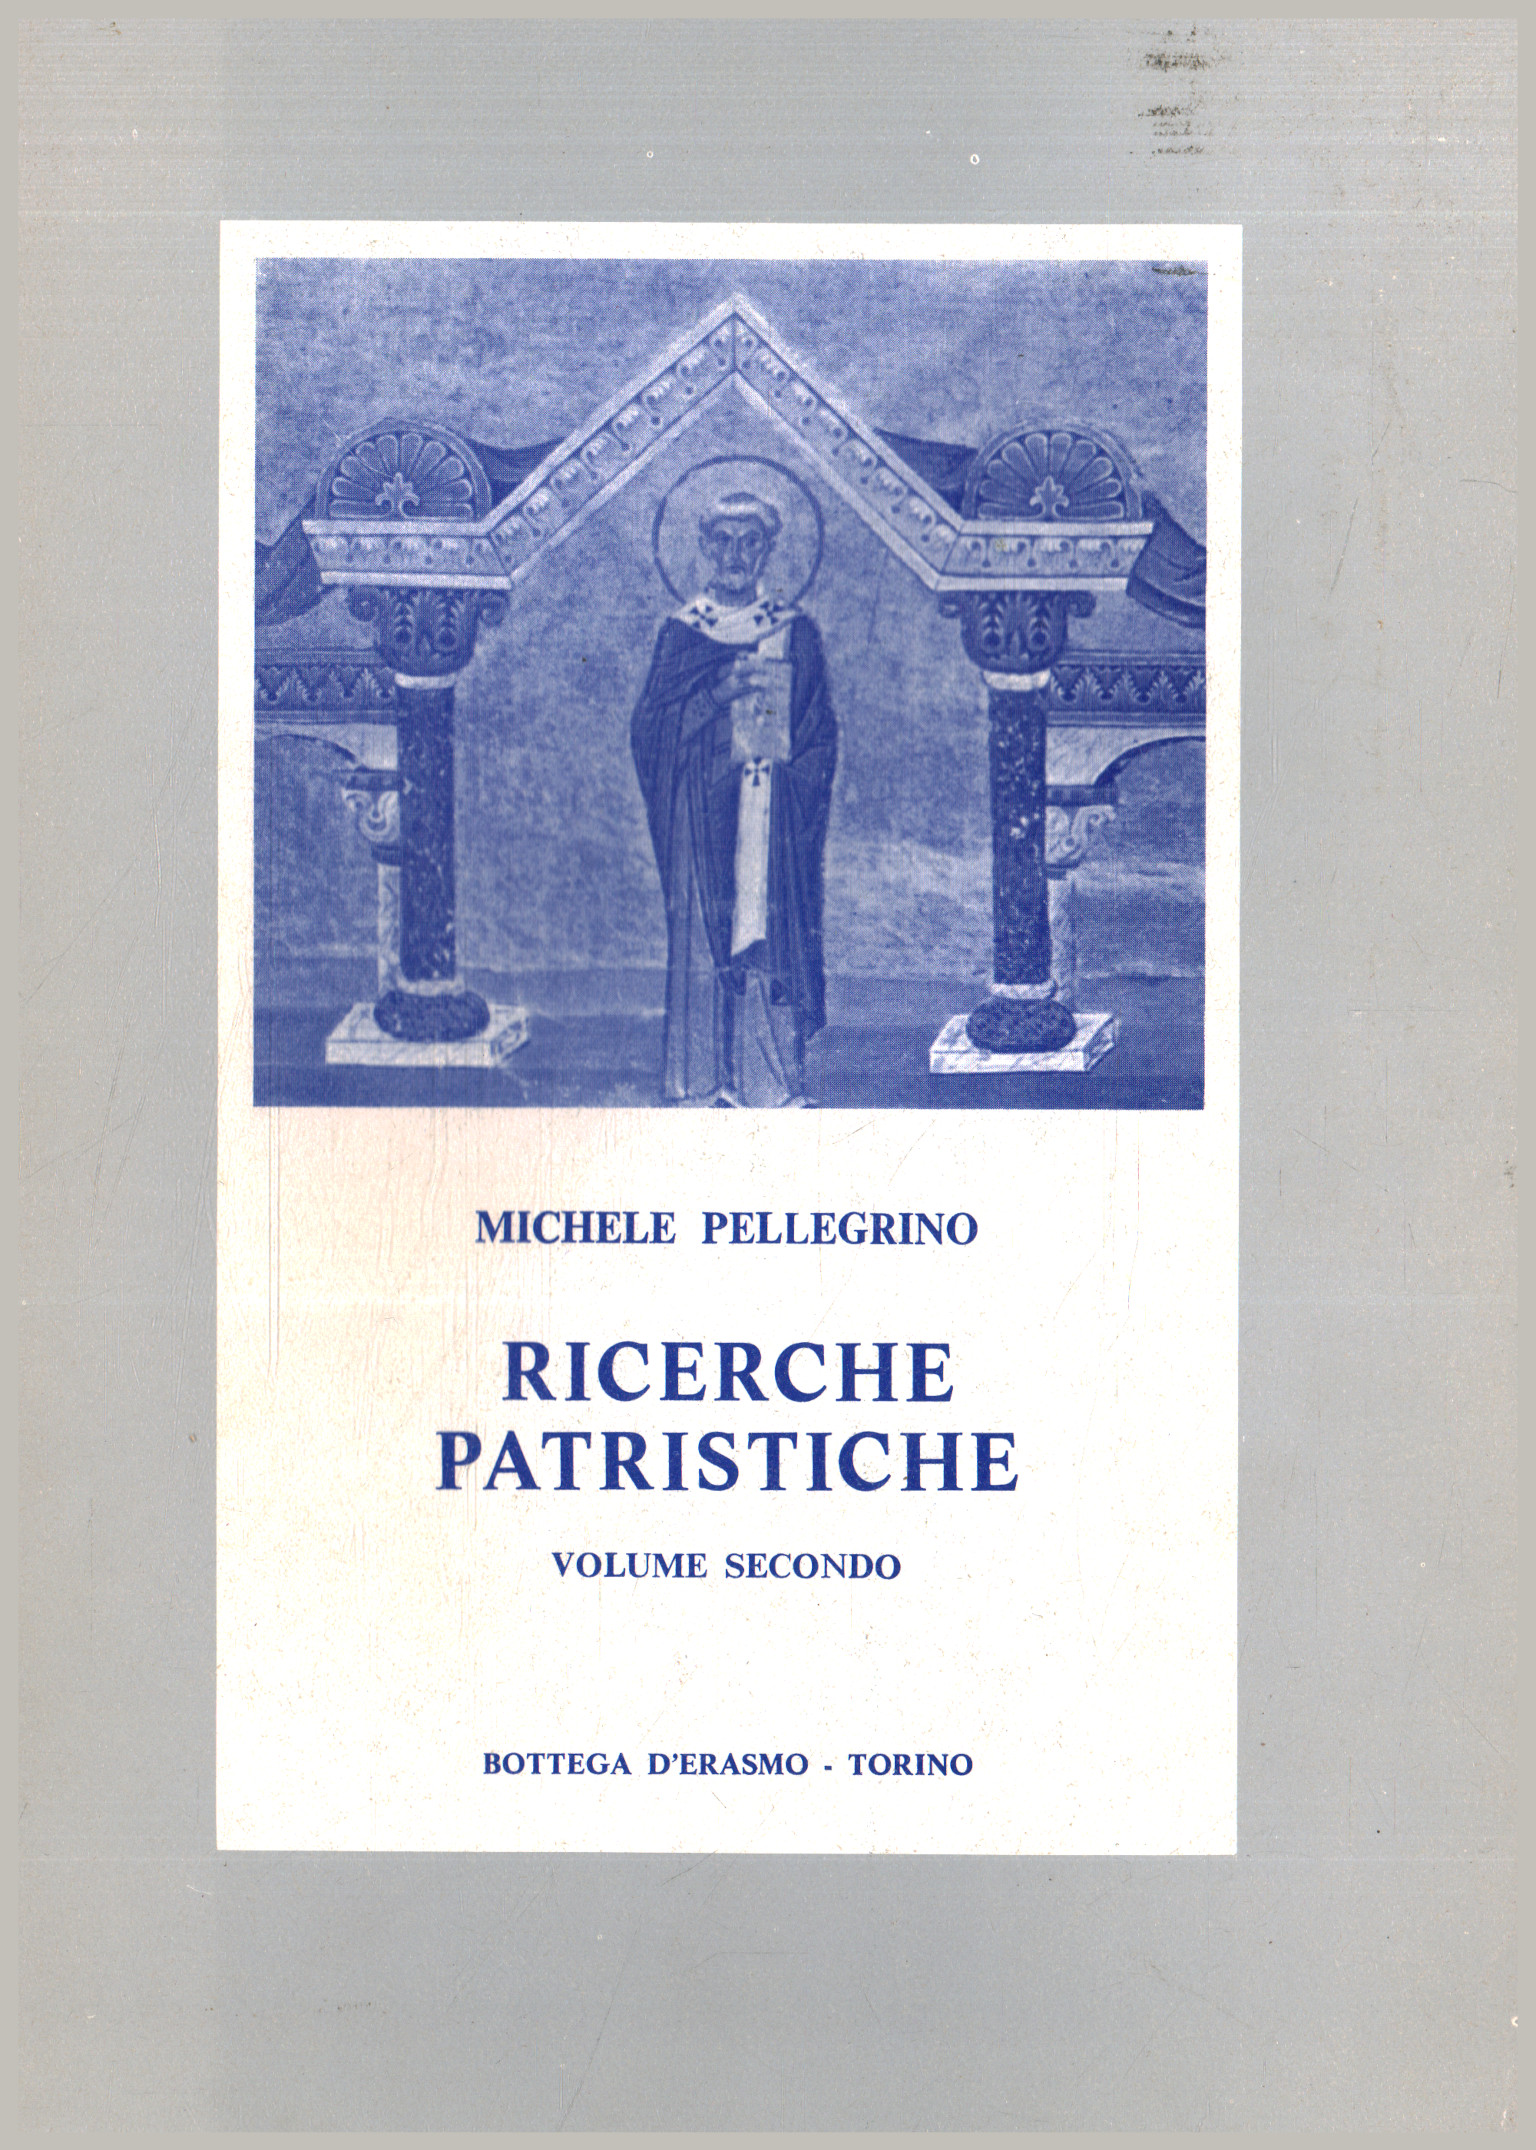 Patristic Researches 1938-1980 (Volume II)